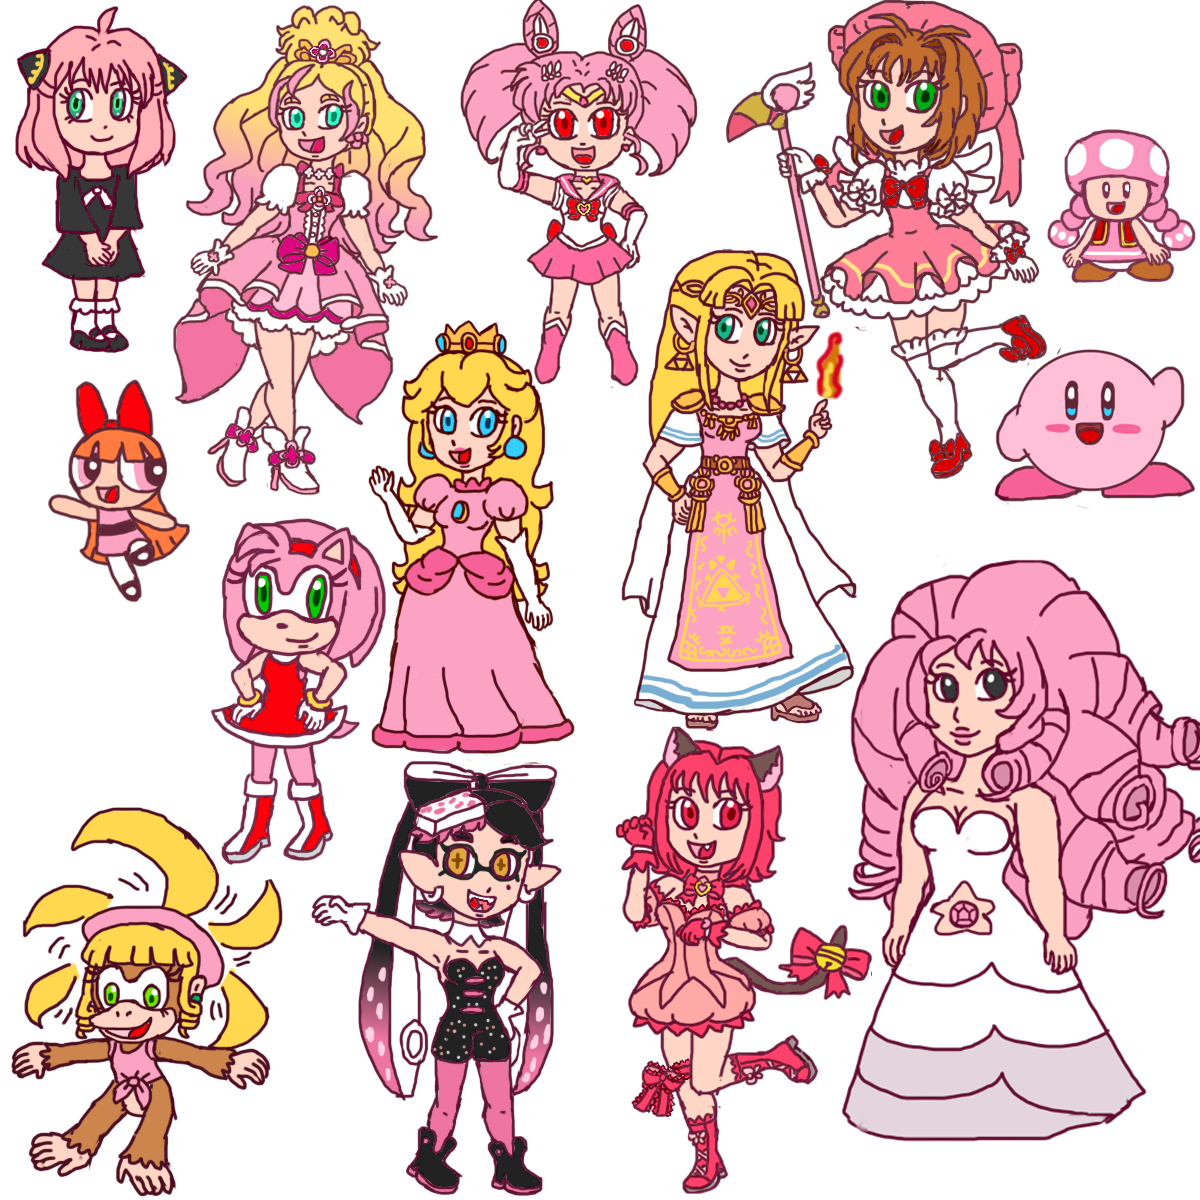 Pink characters by GoddessPrincessLulu on DeviantArt